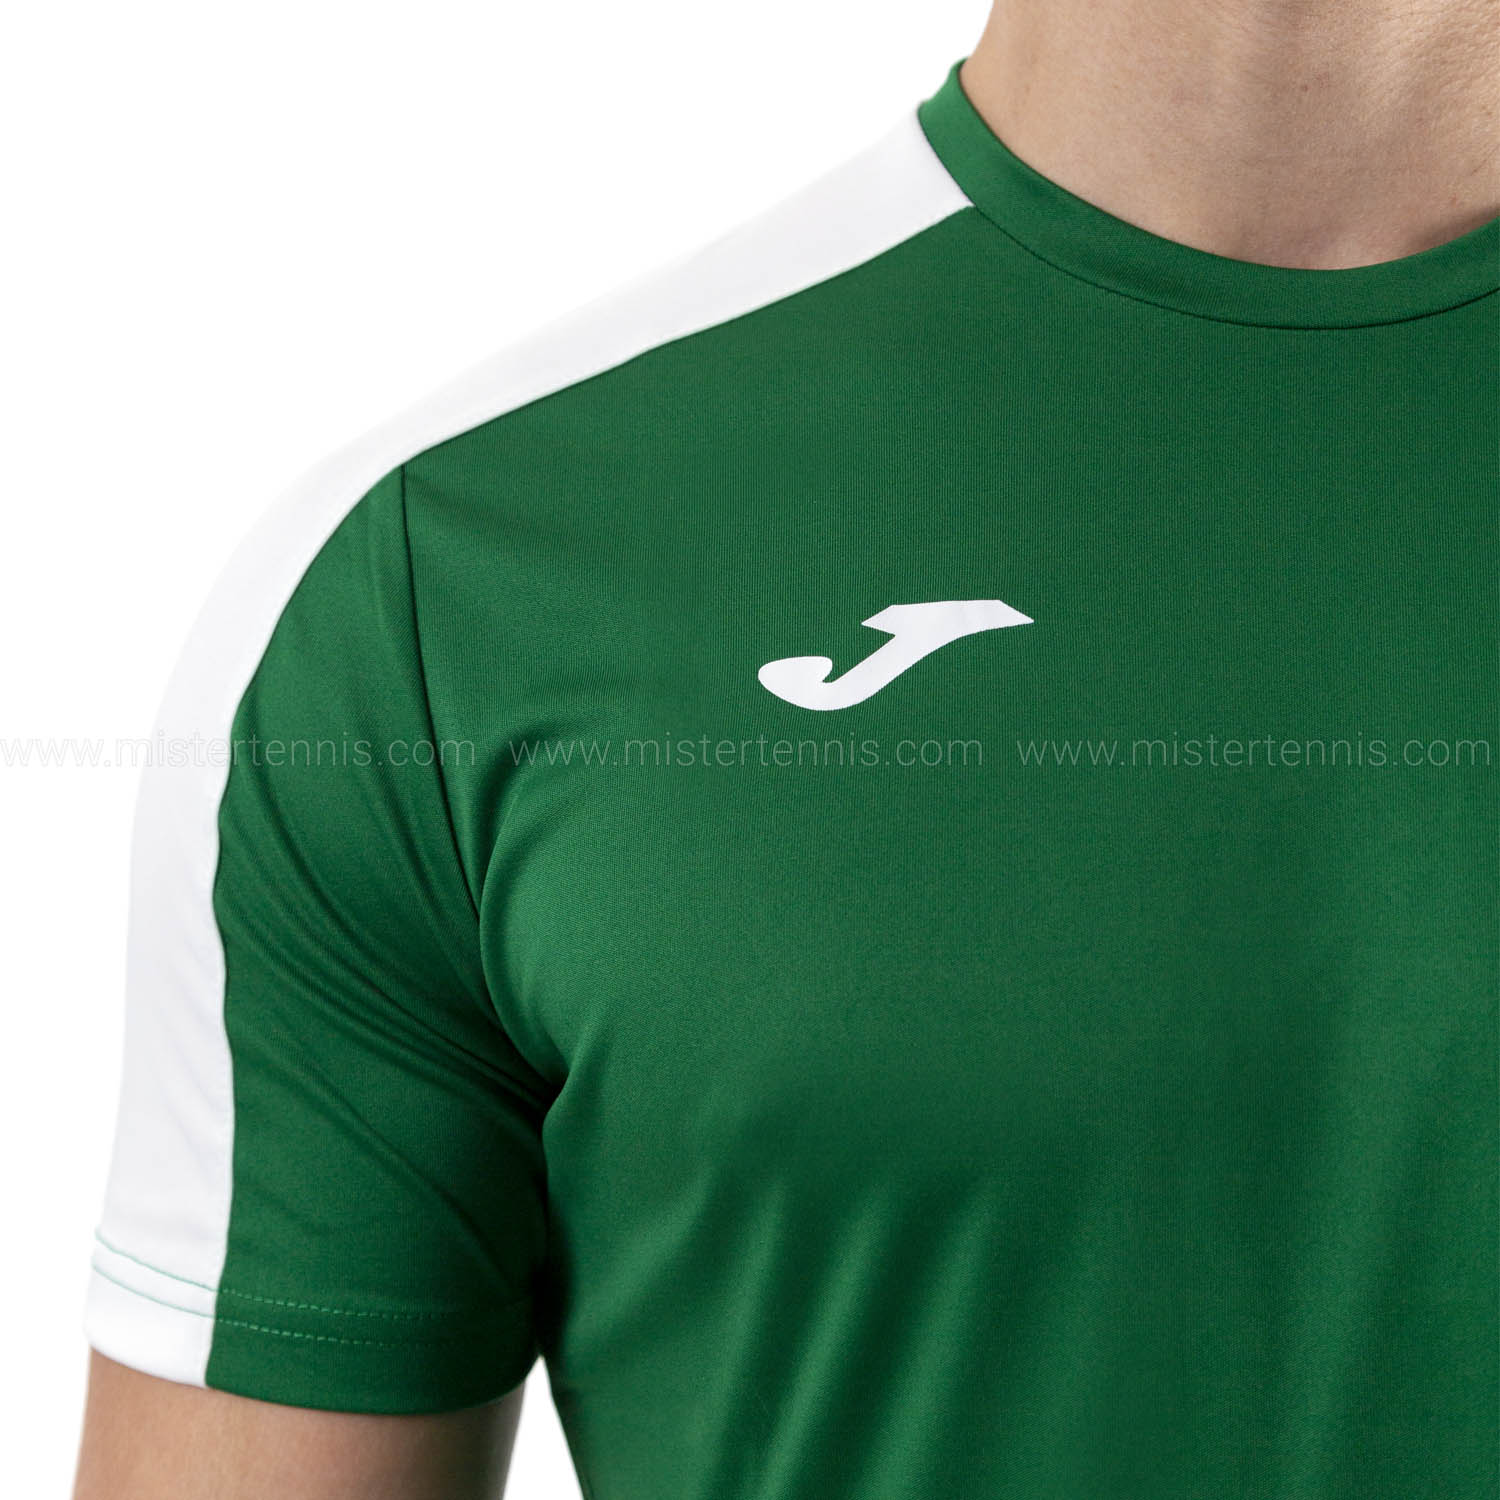 Joma Academy III Camiseta - Green Medium/White